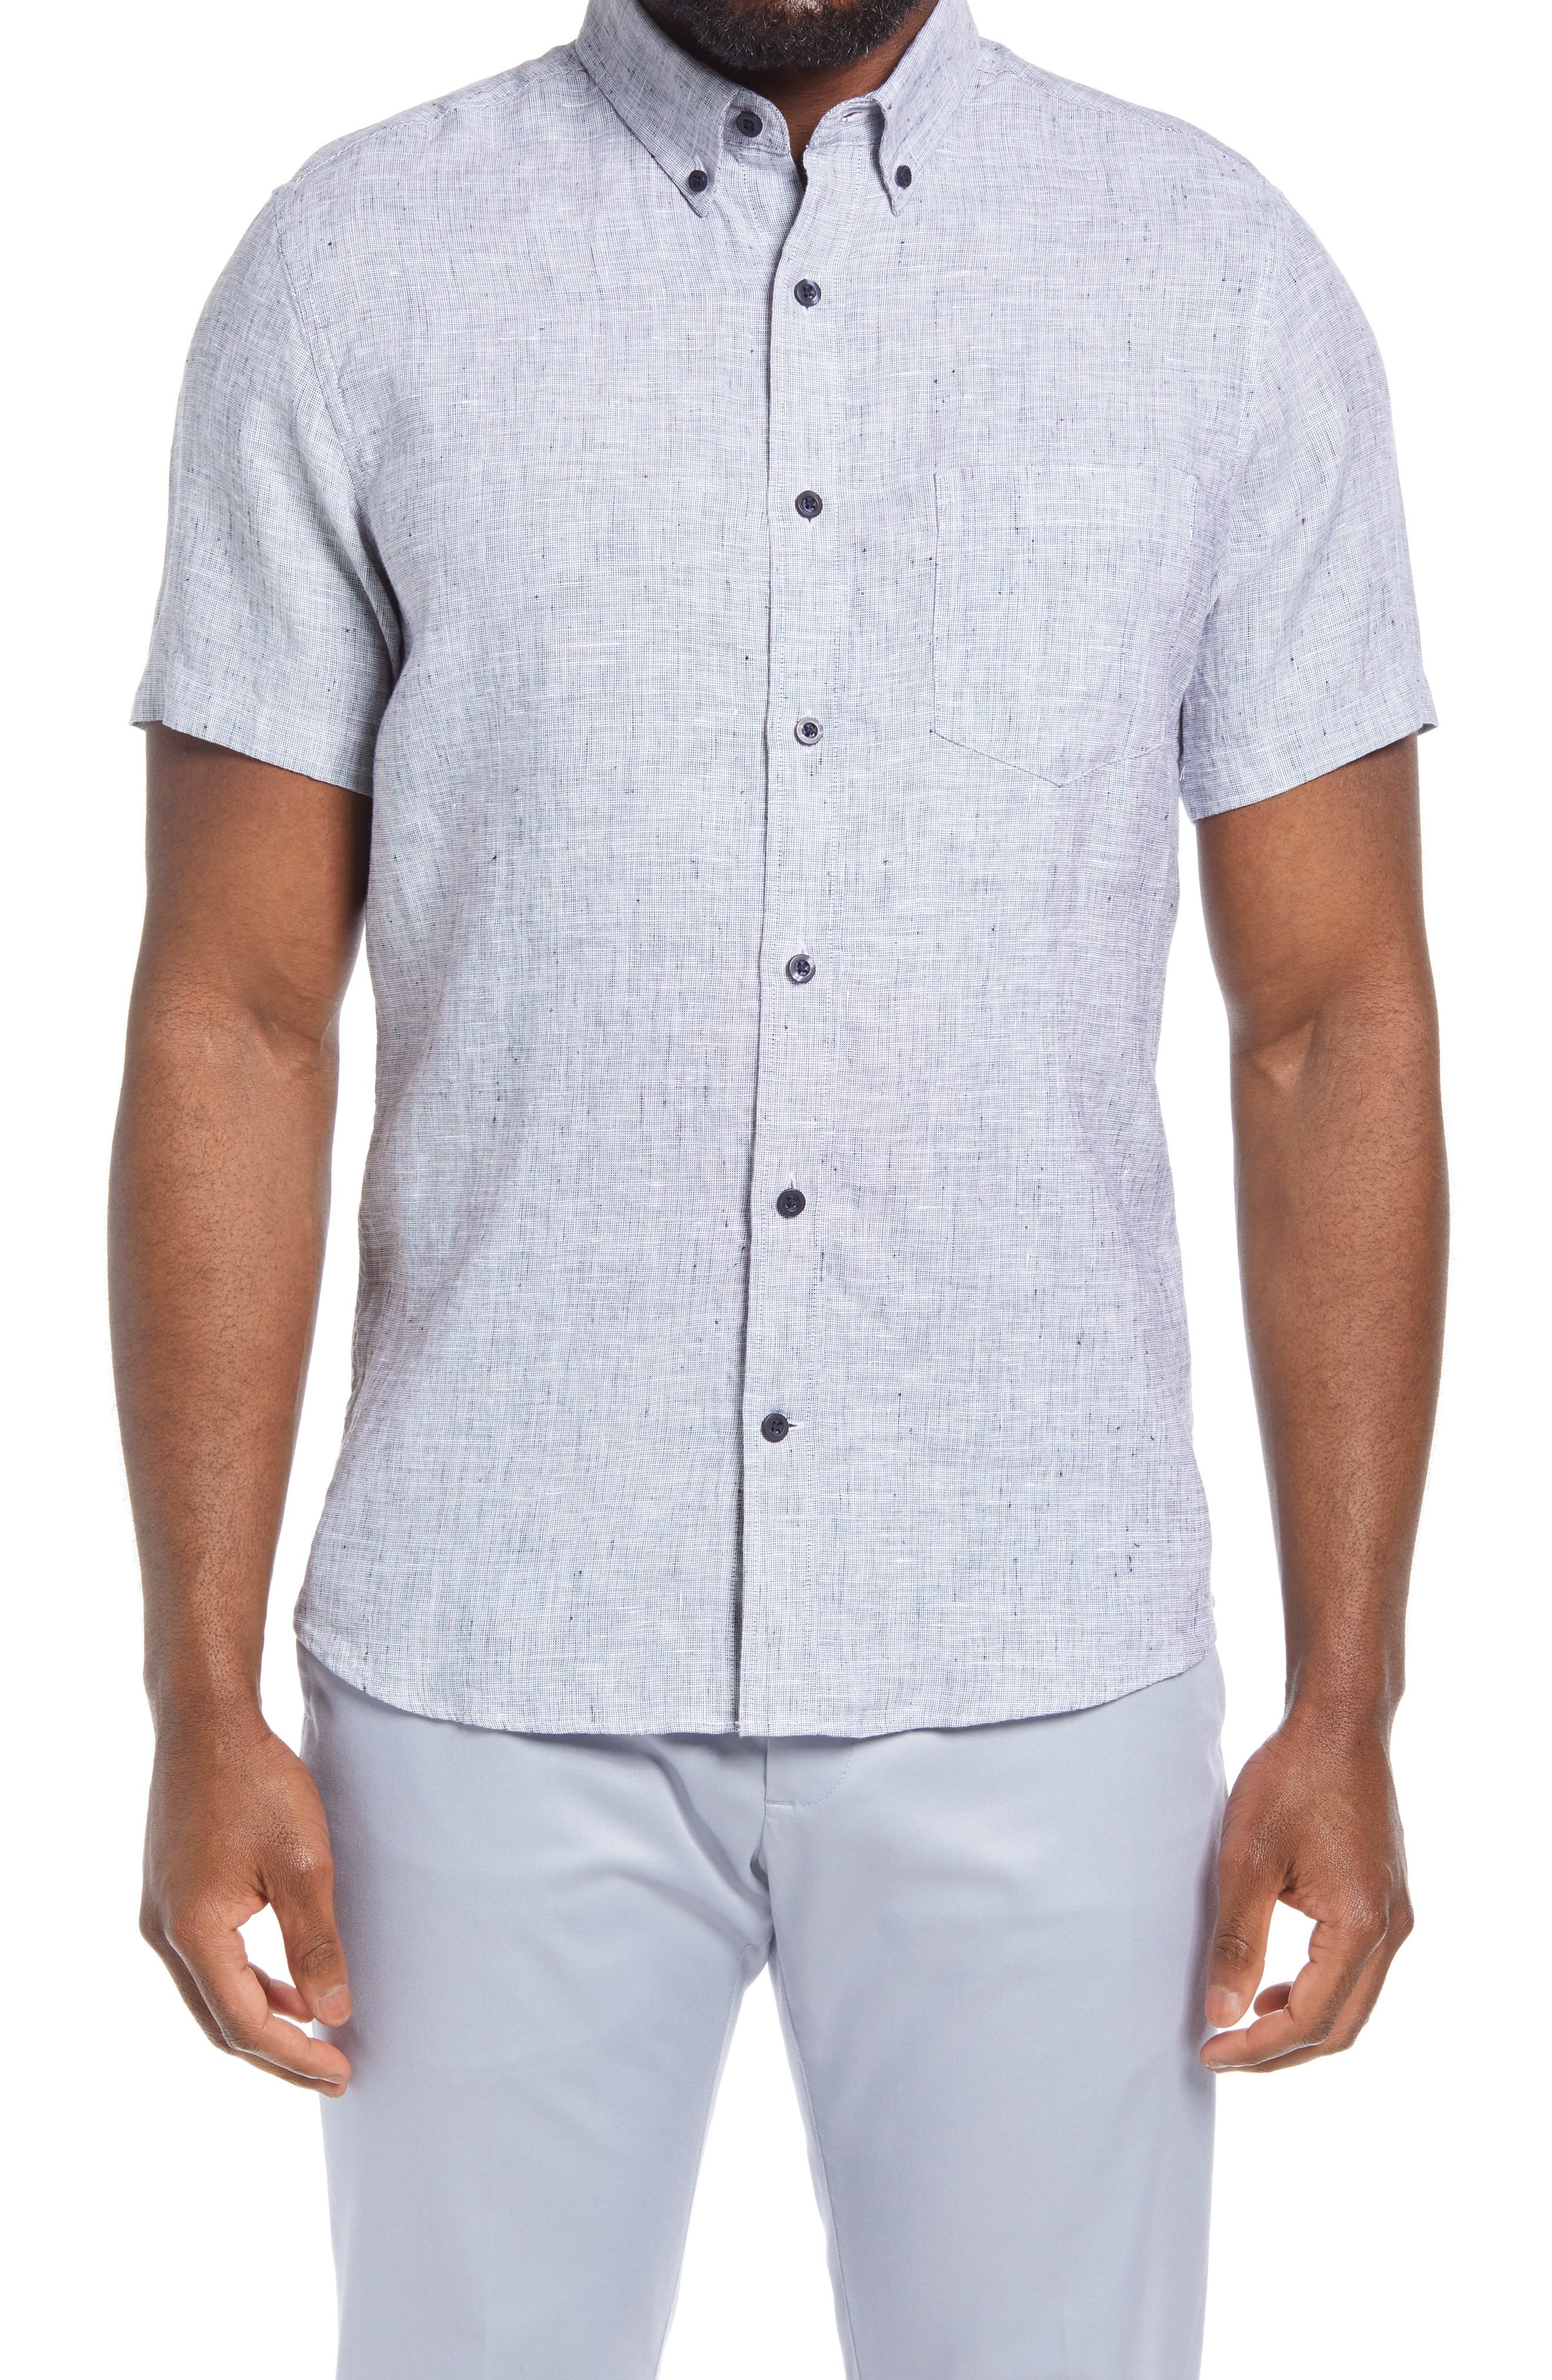 Men's Linen Short Sleeve Summer Solid Shirts Beach Casual Cool Tops Tee Holiday